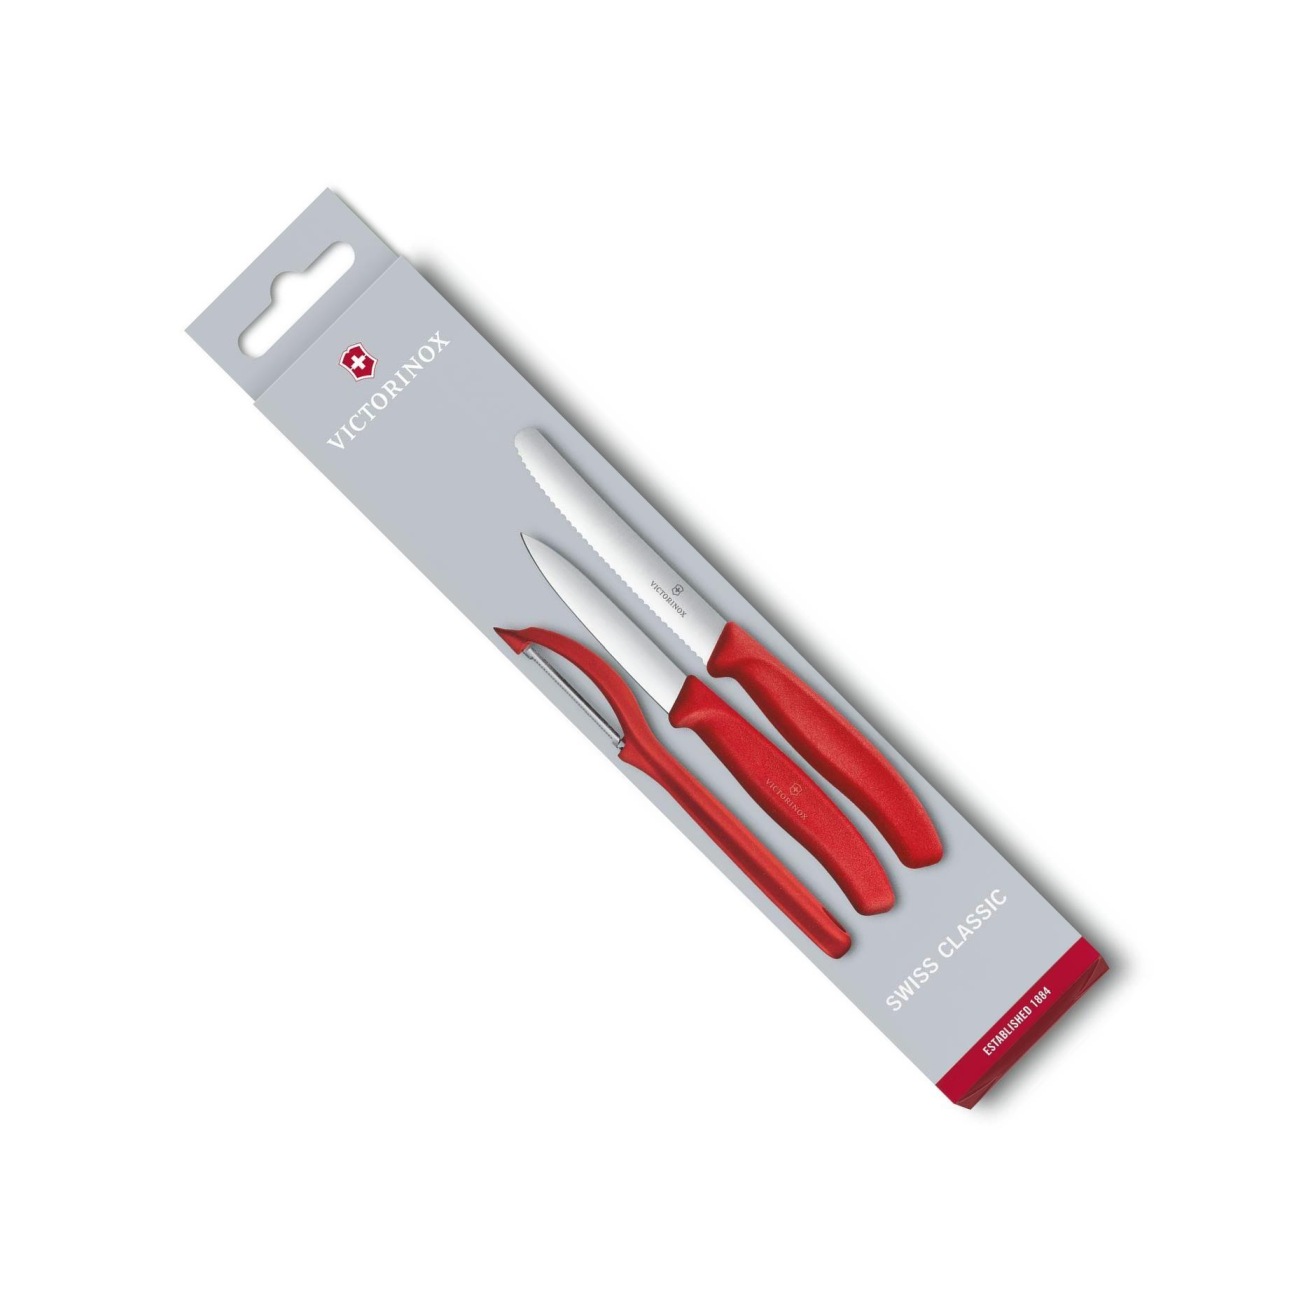 Sada kuchyňských nožů a škrabka červená SWISS CLASSIC - Victorinox